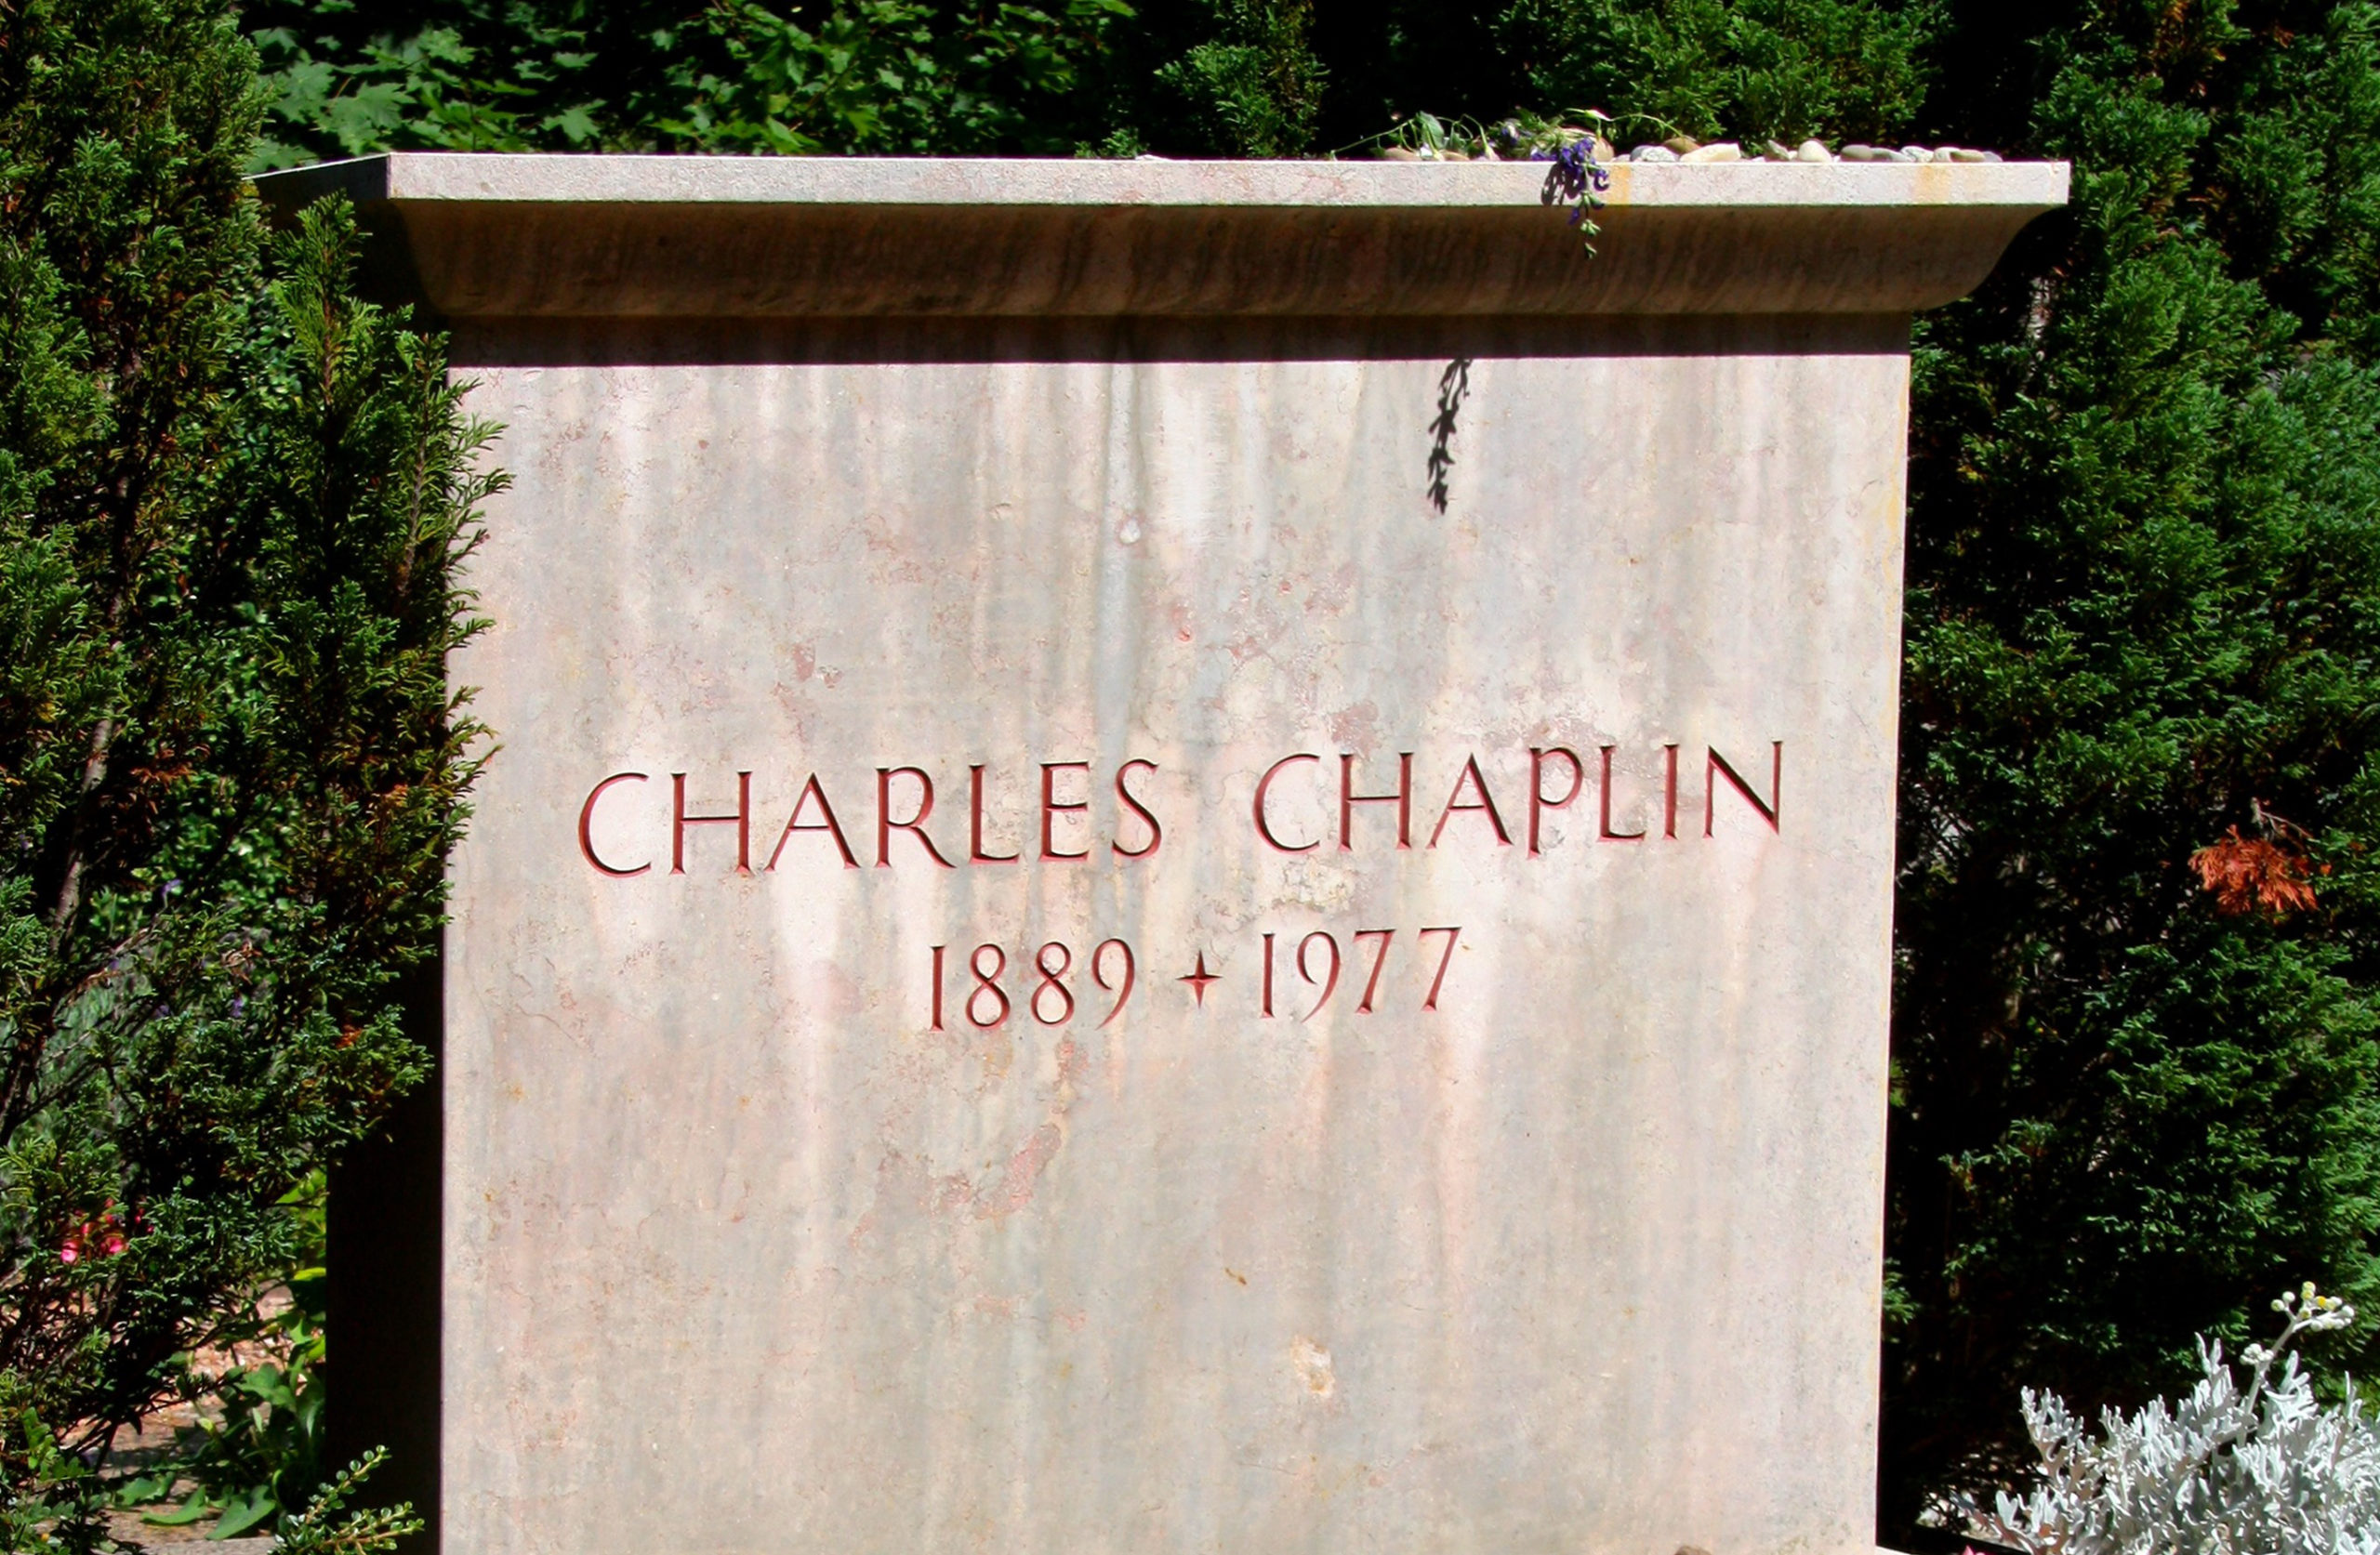 Charlie Chaplin Grave